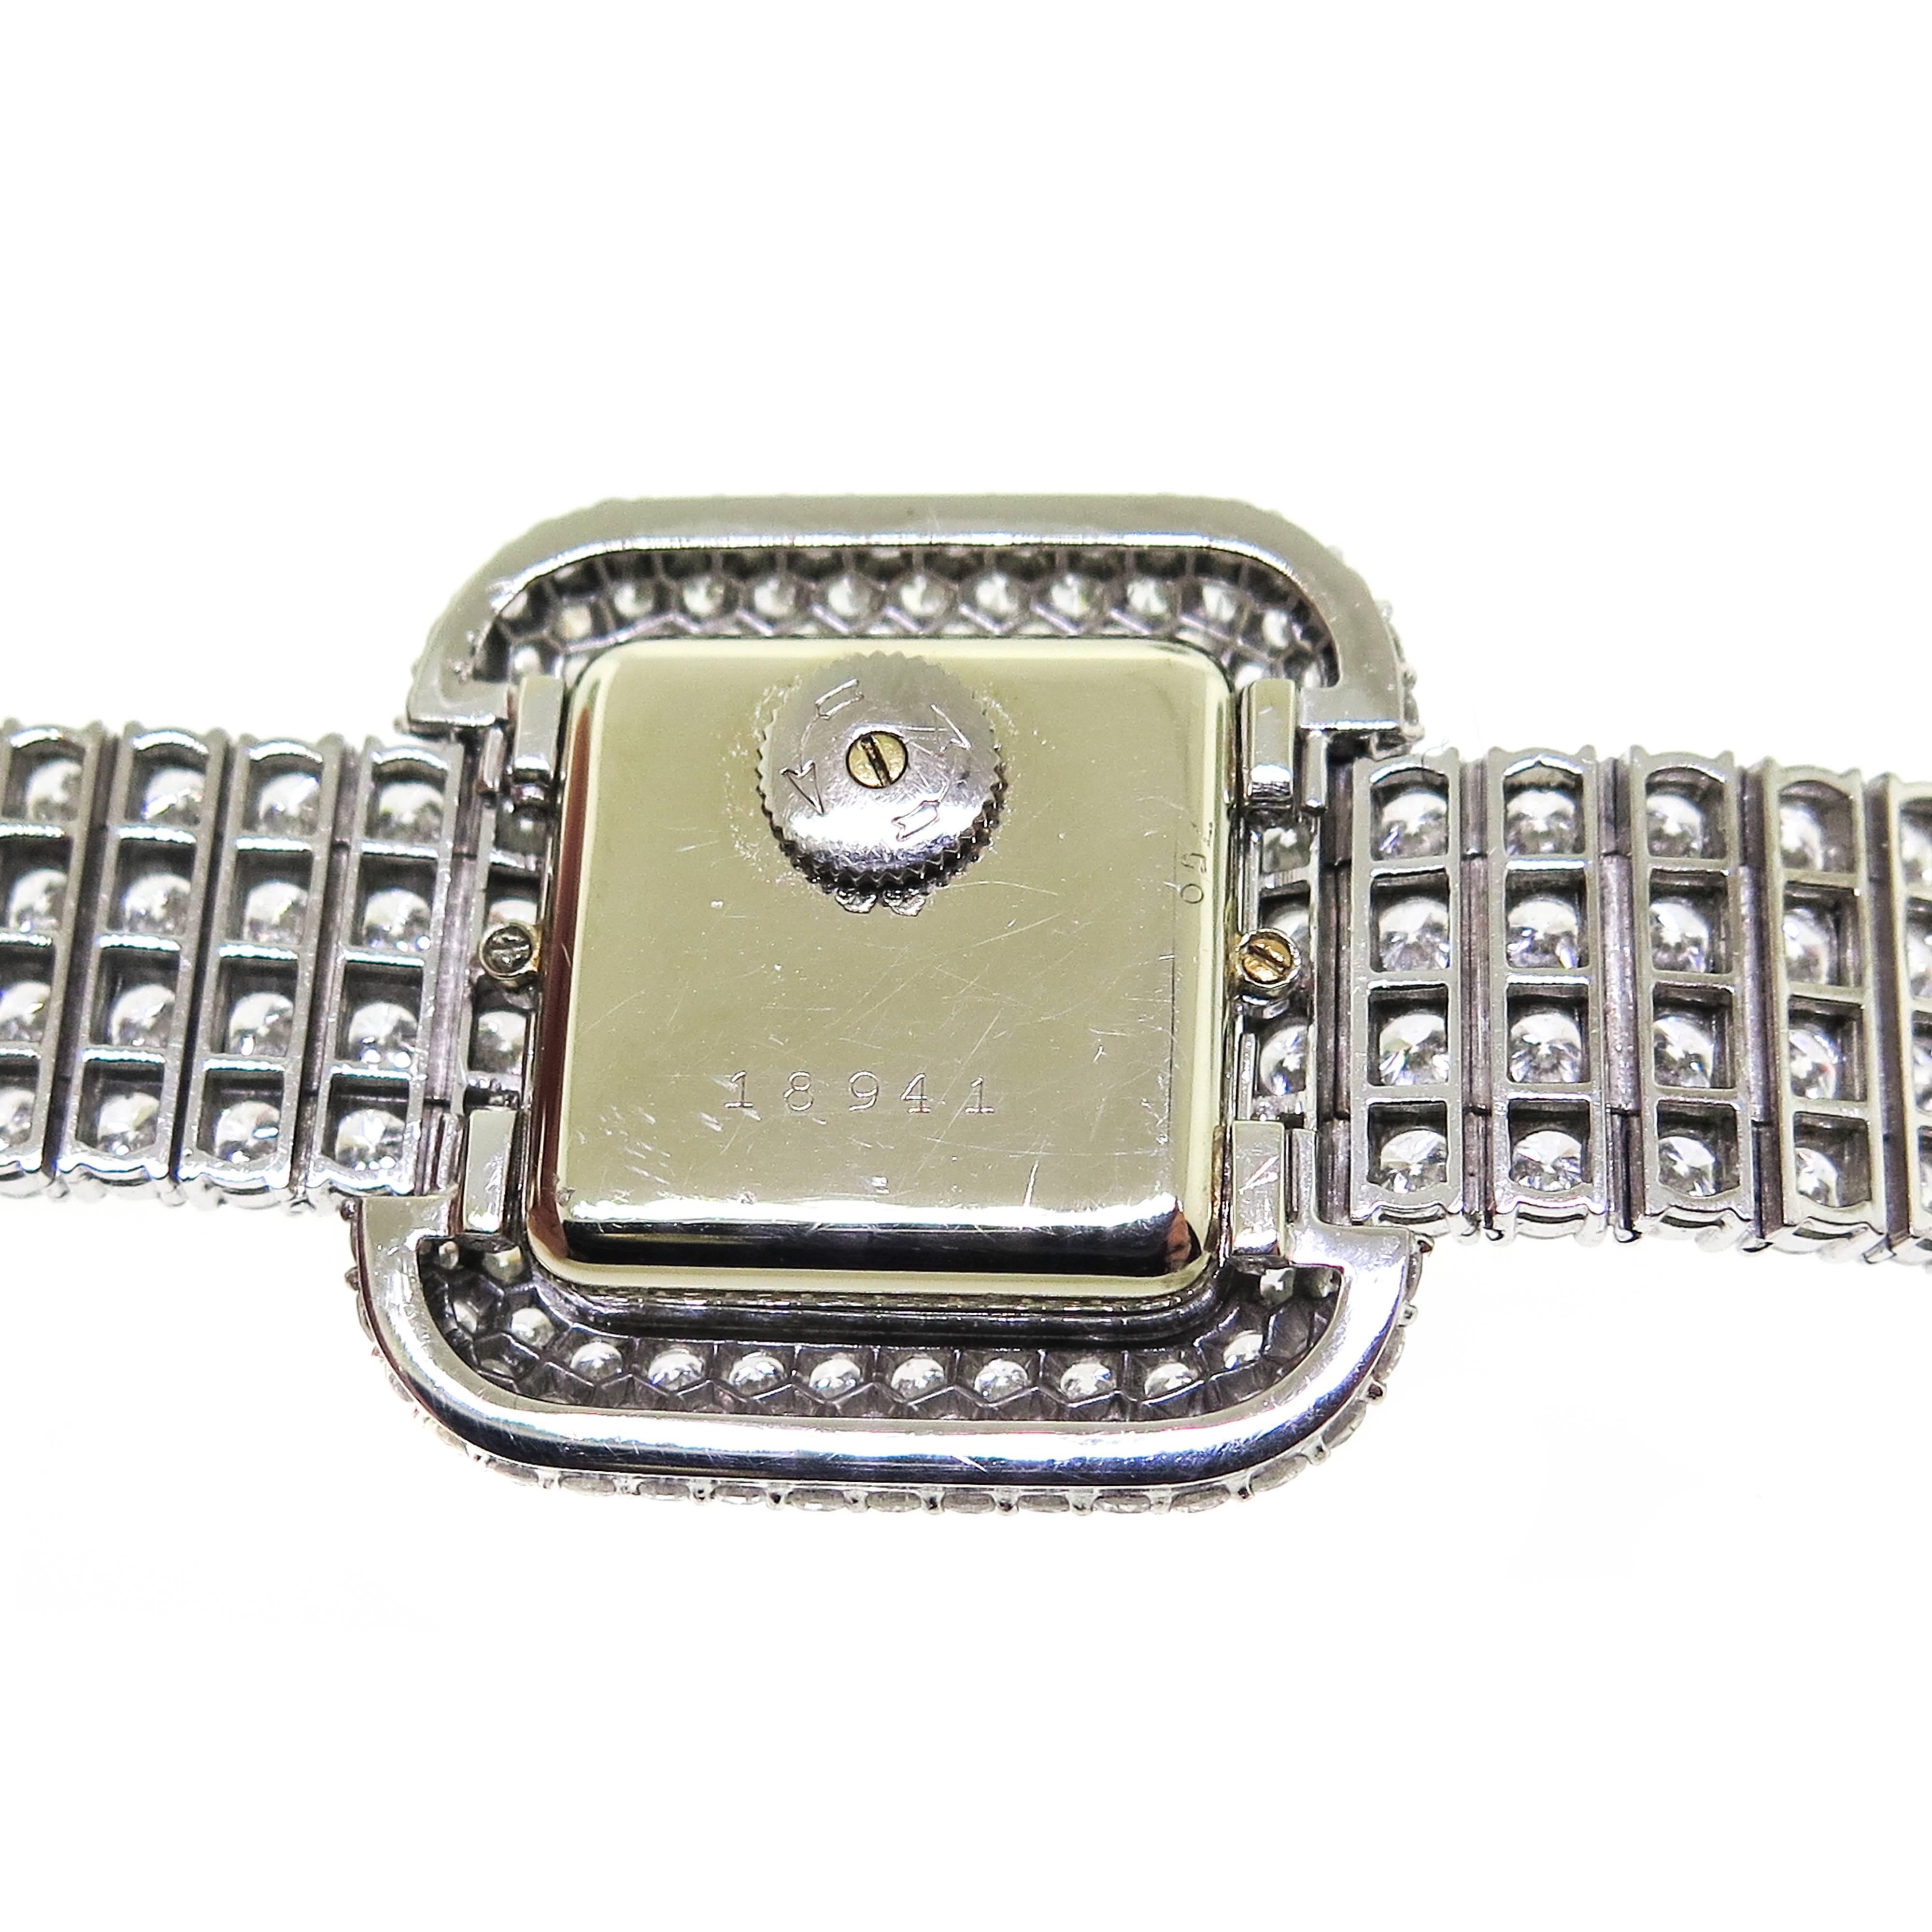 Cartier Ladies White Gold Pave Diamond Manual Wristwatch 3